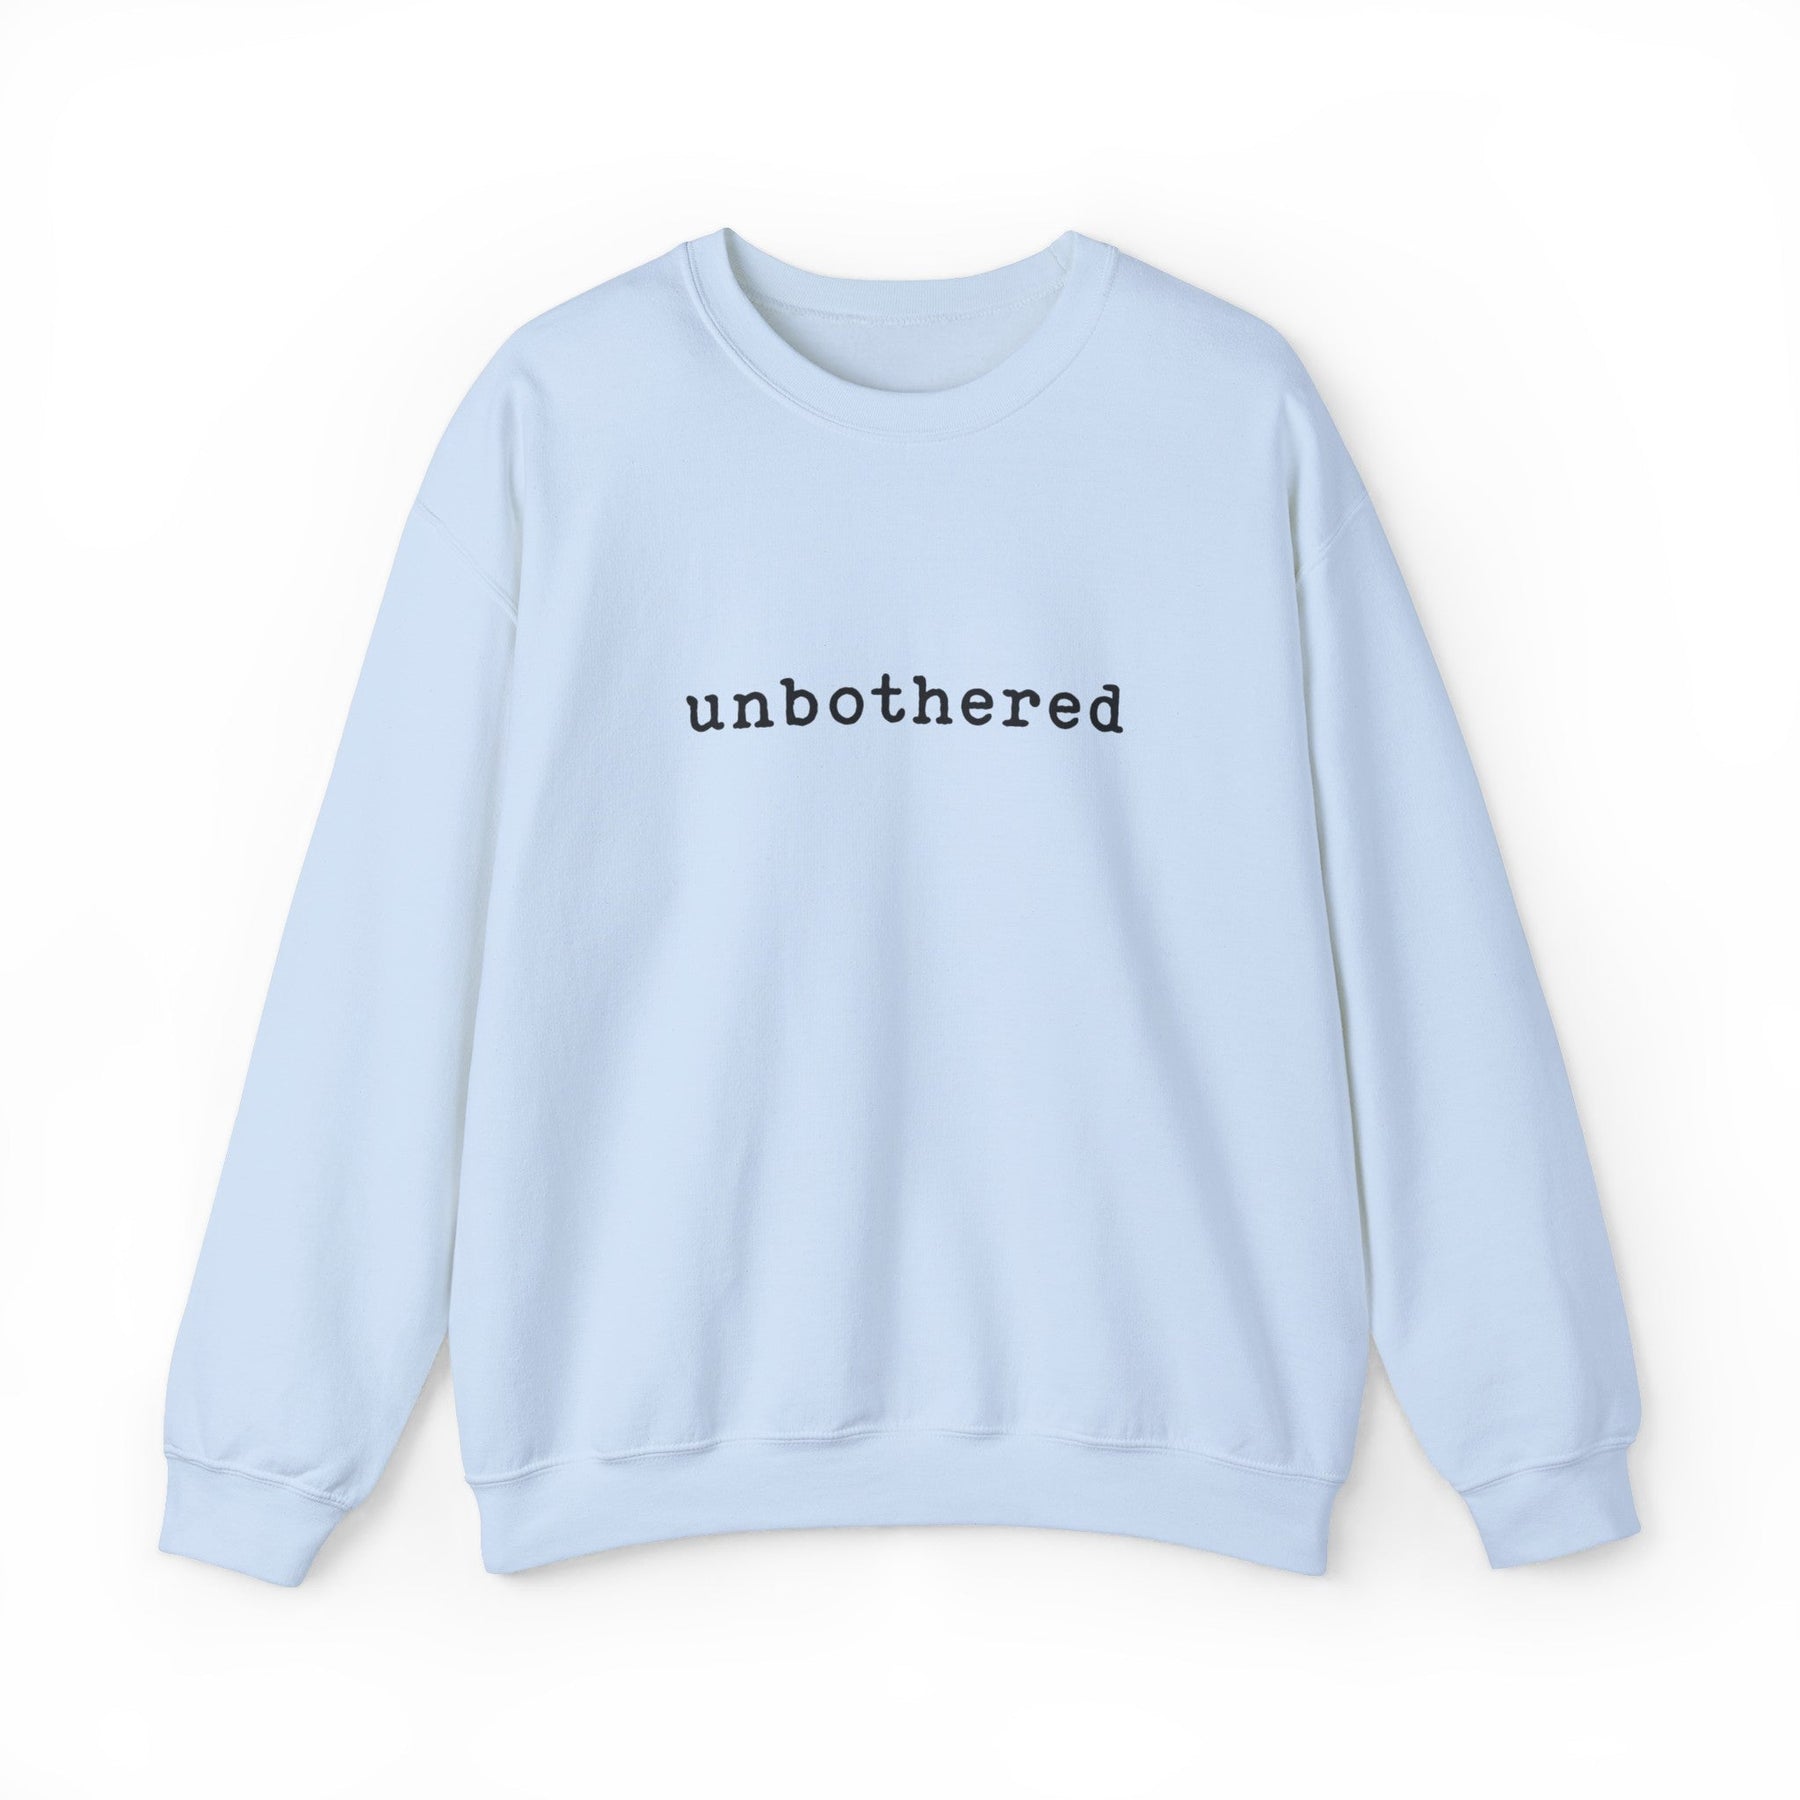 Unbothered Typewriter Long Sleeve Crew Neck Sweatshirt - Goth Cloth Co.Sweatshirt83037990795216991383